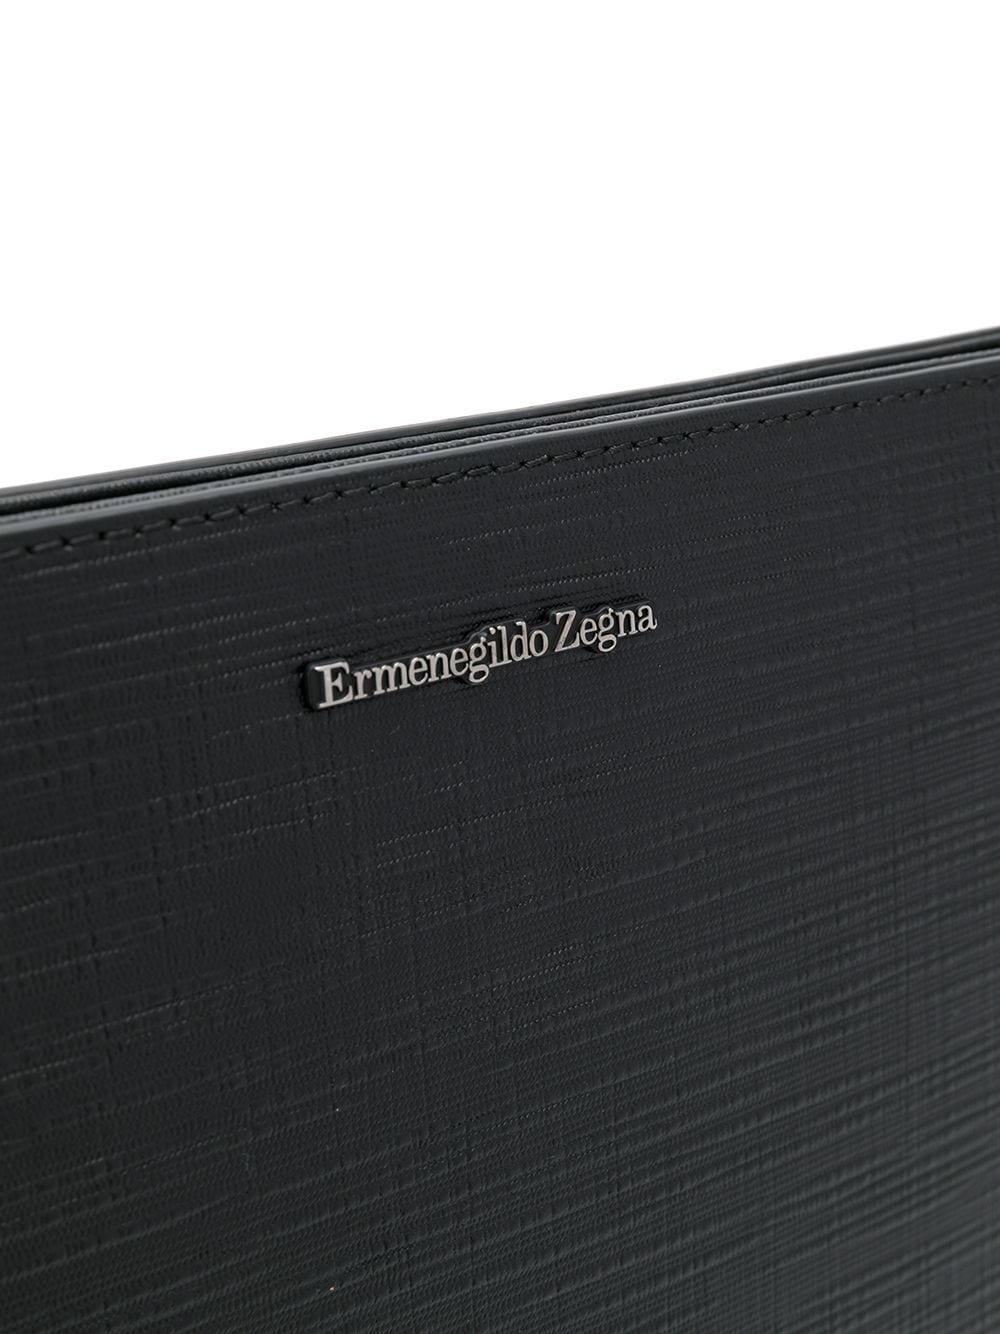 фото Ermenegildo zegna клатч с металлическим логотипом